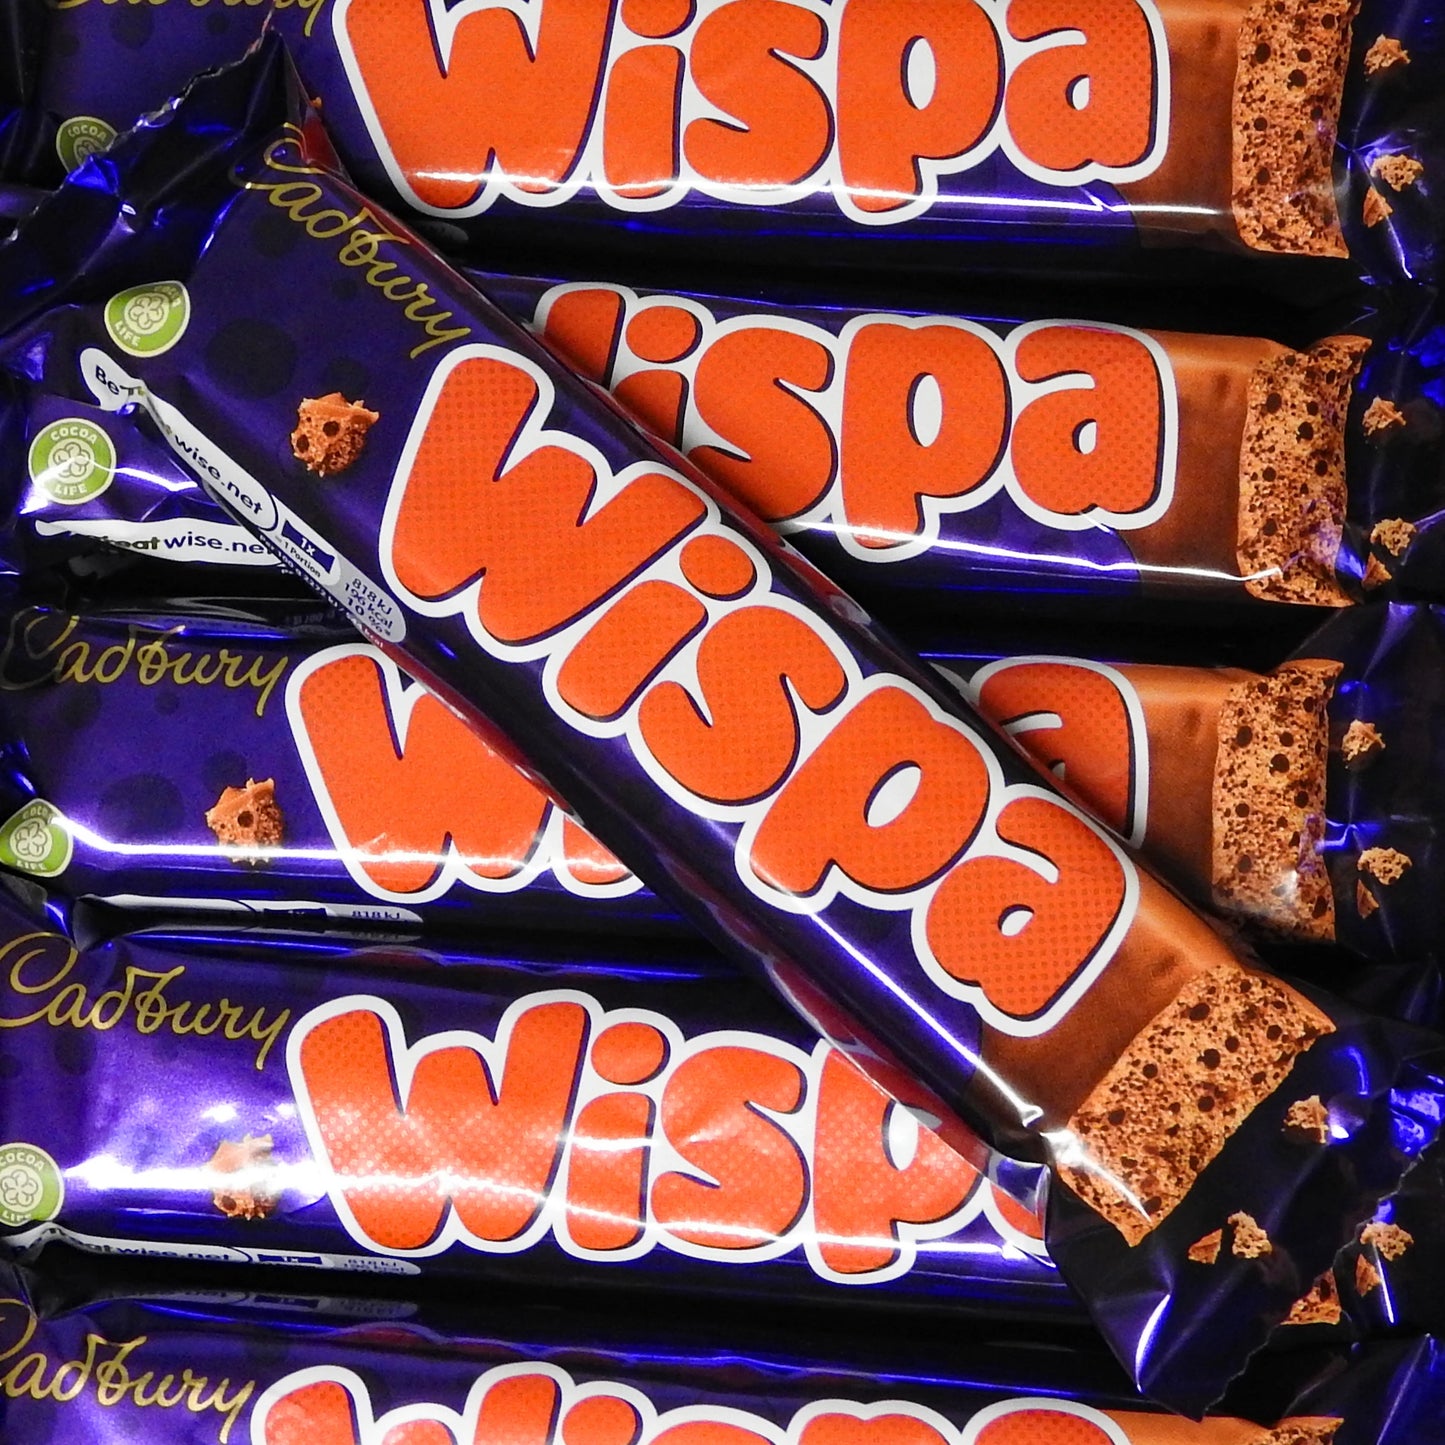 Cadbury Wispa - Retro Sweets at The Sweetie Jar